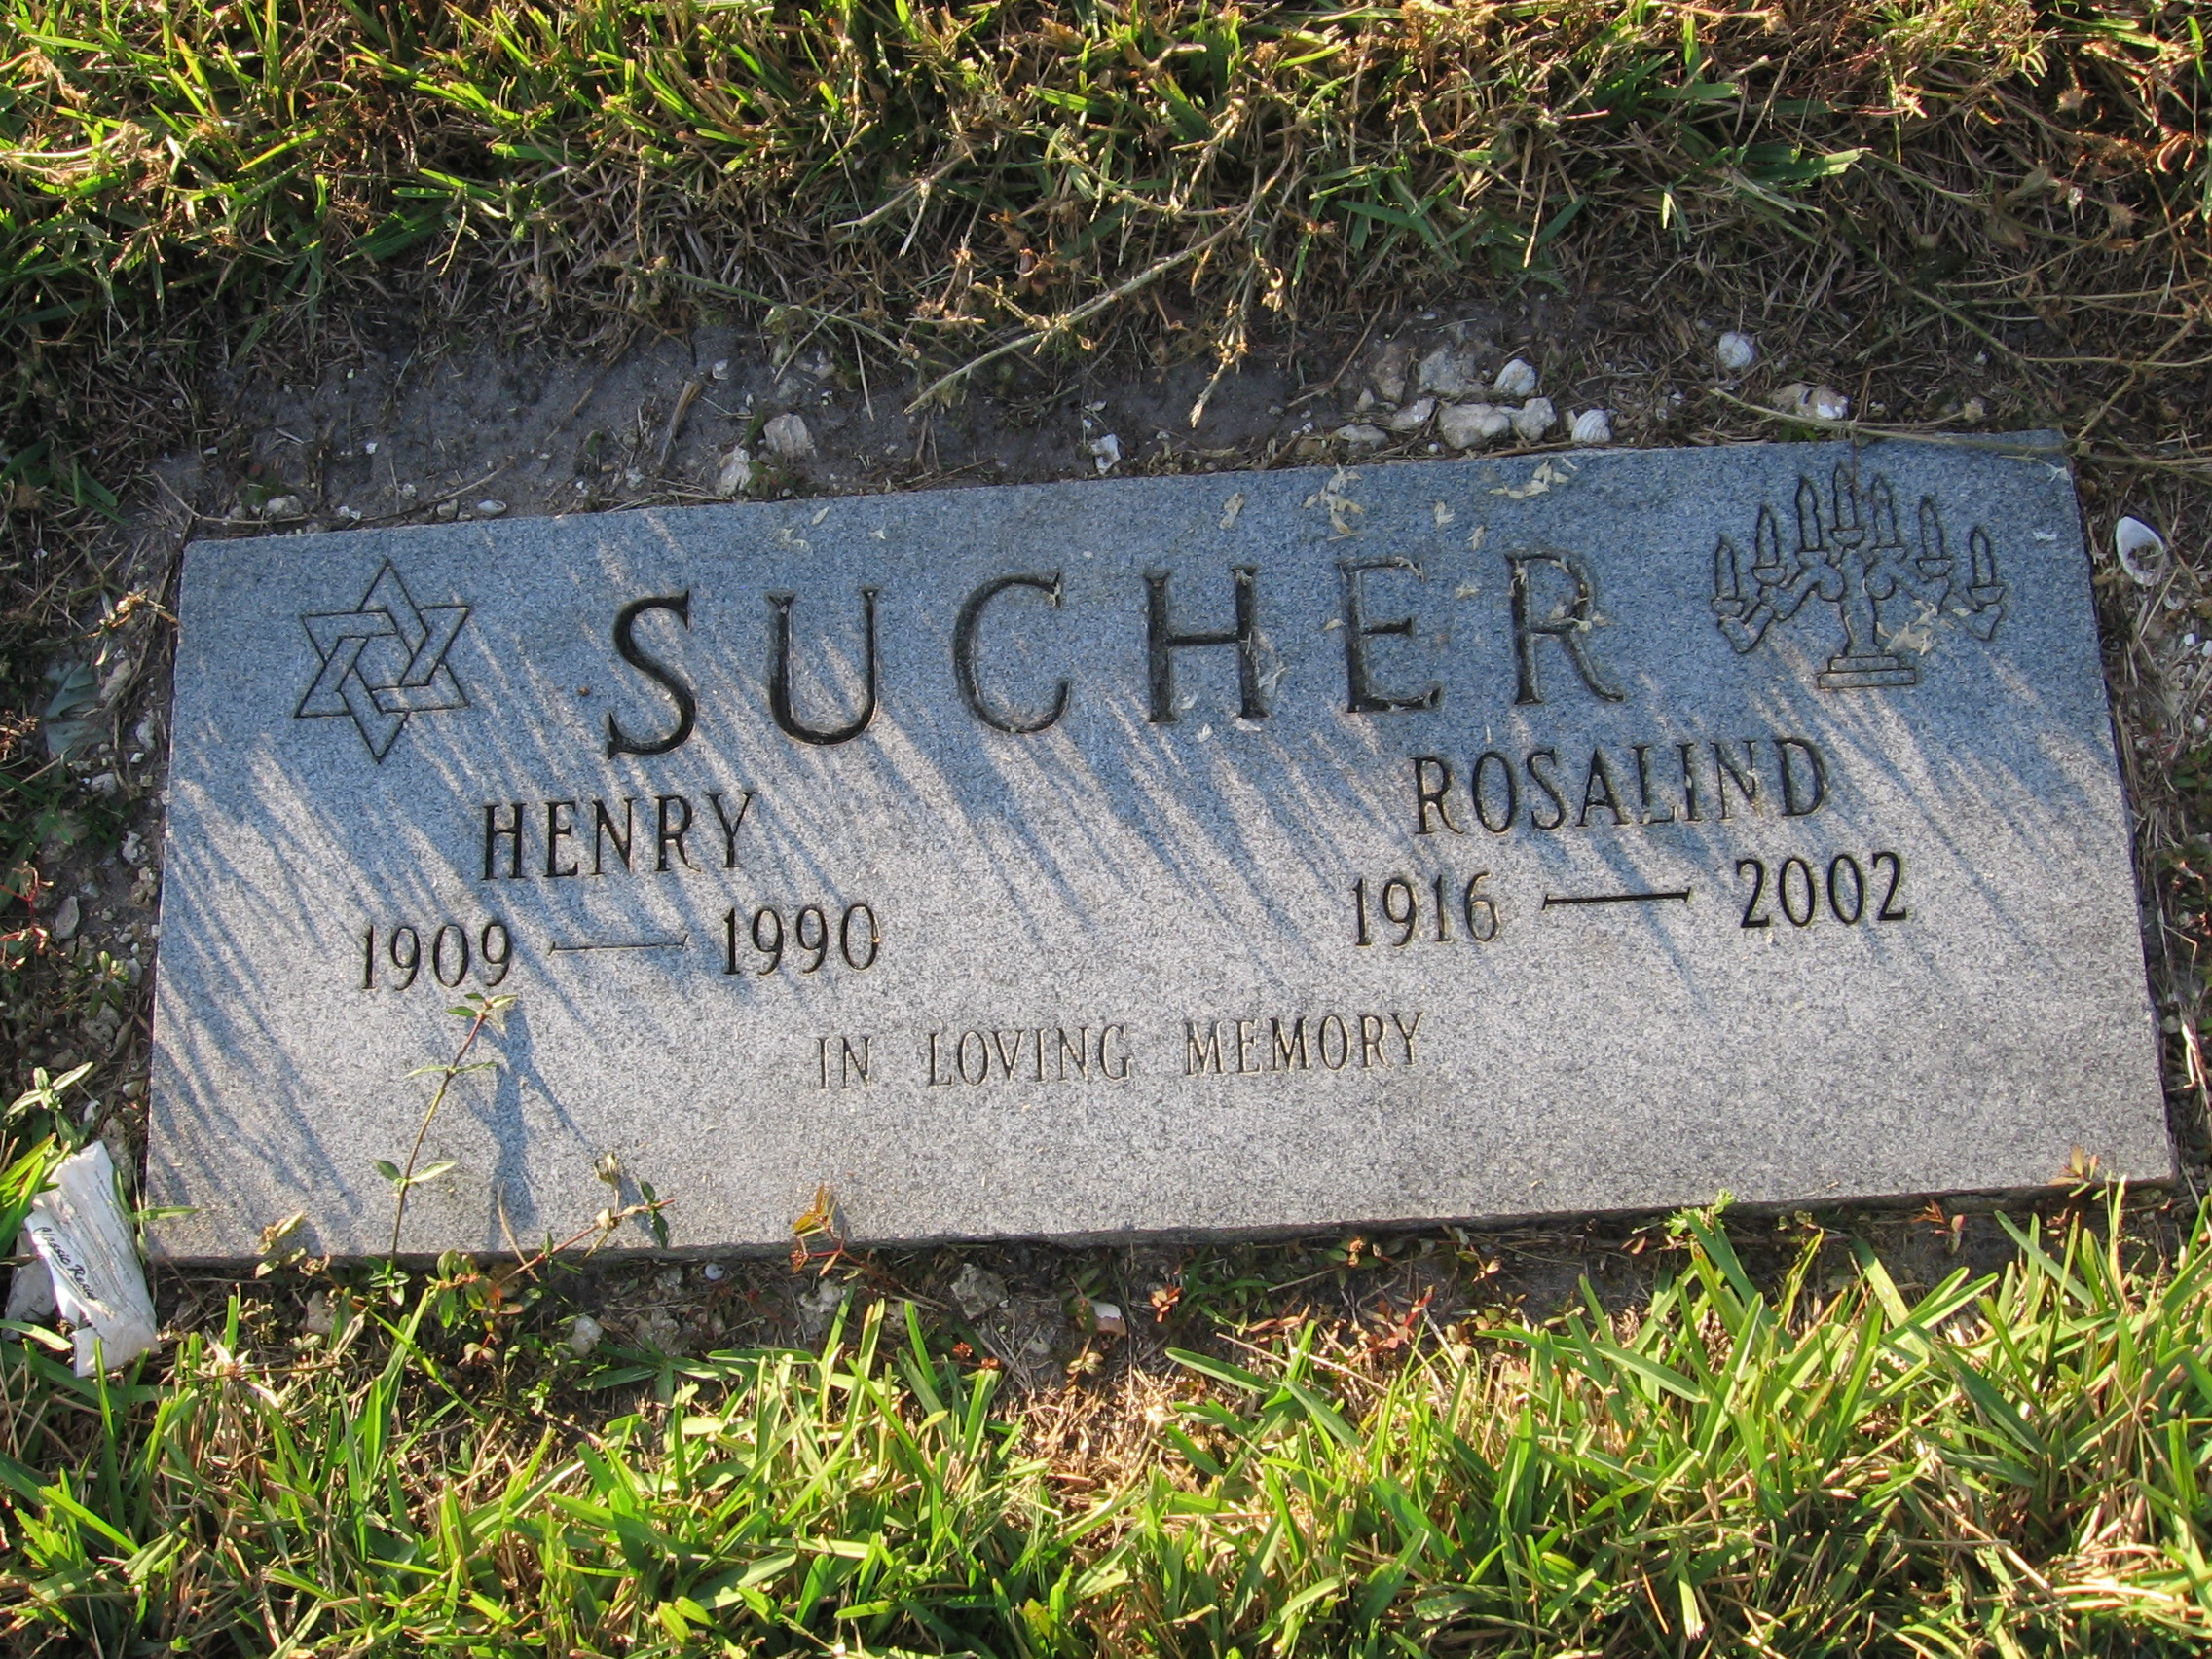 Henry Sucher